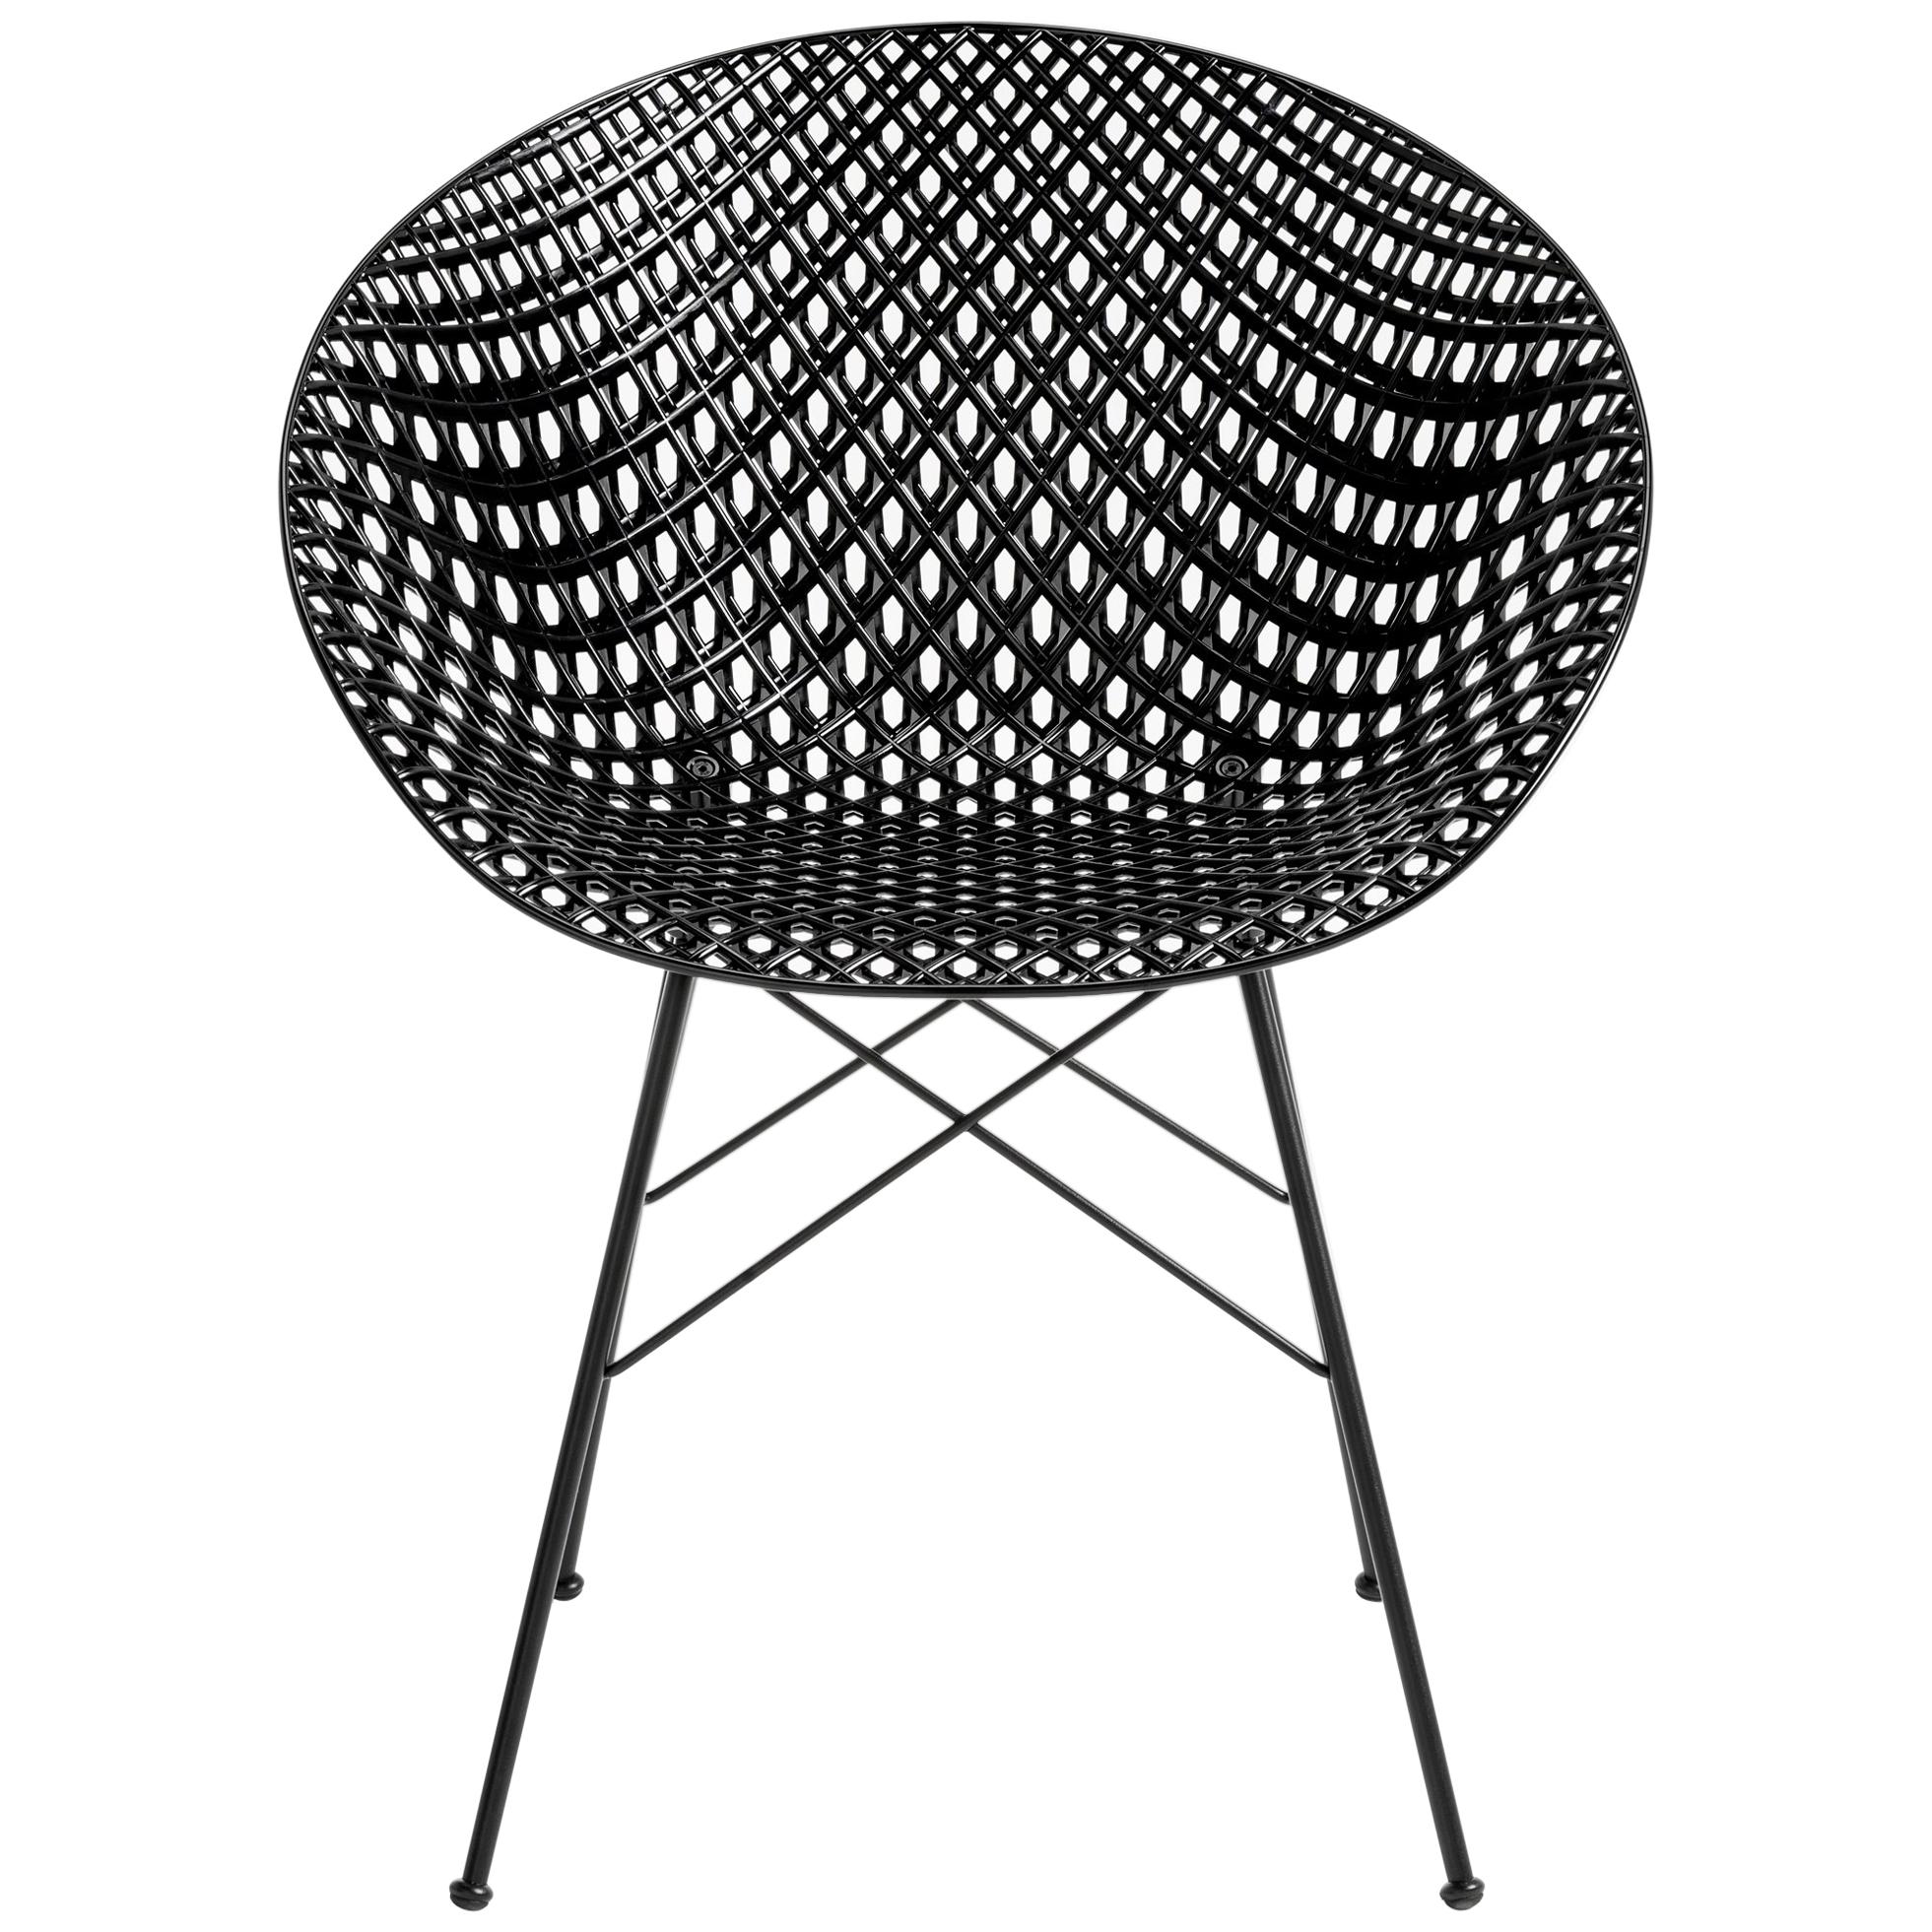 Set of 2 Kartell Smatrik Outdoor Chair in Black by Tokujin Yoshioka